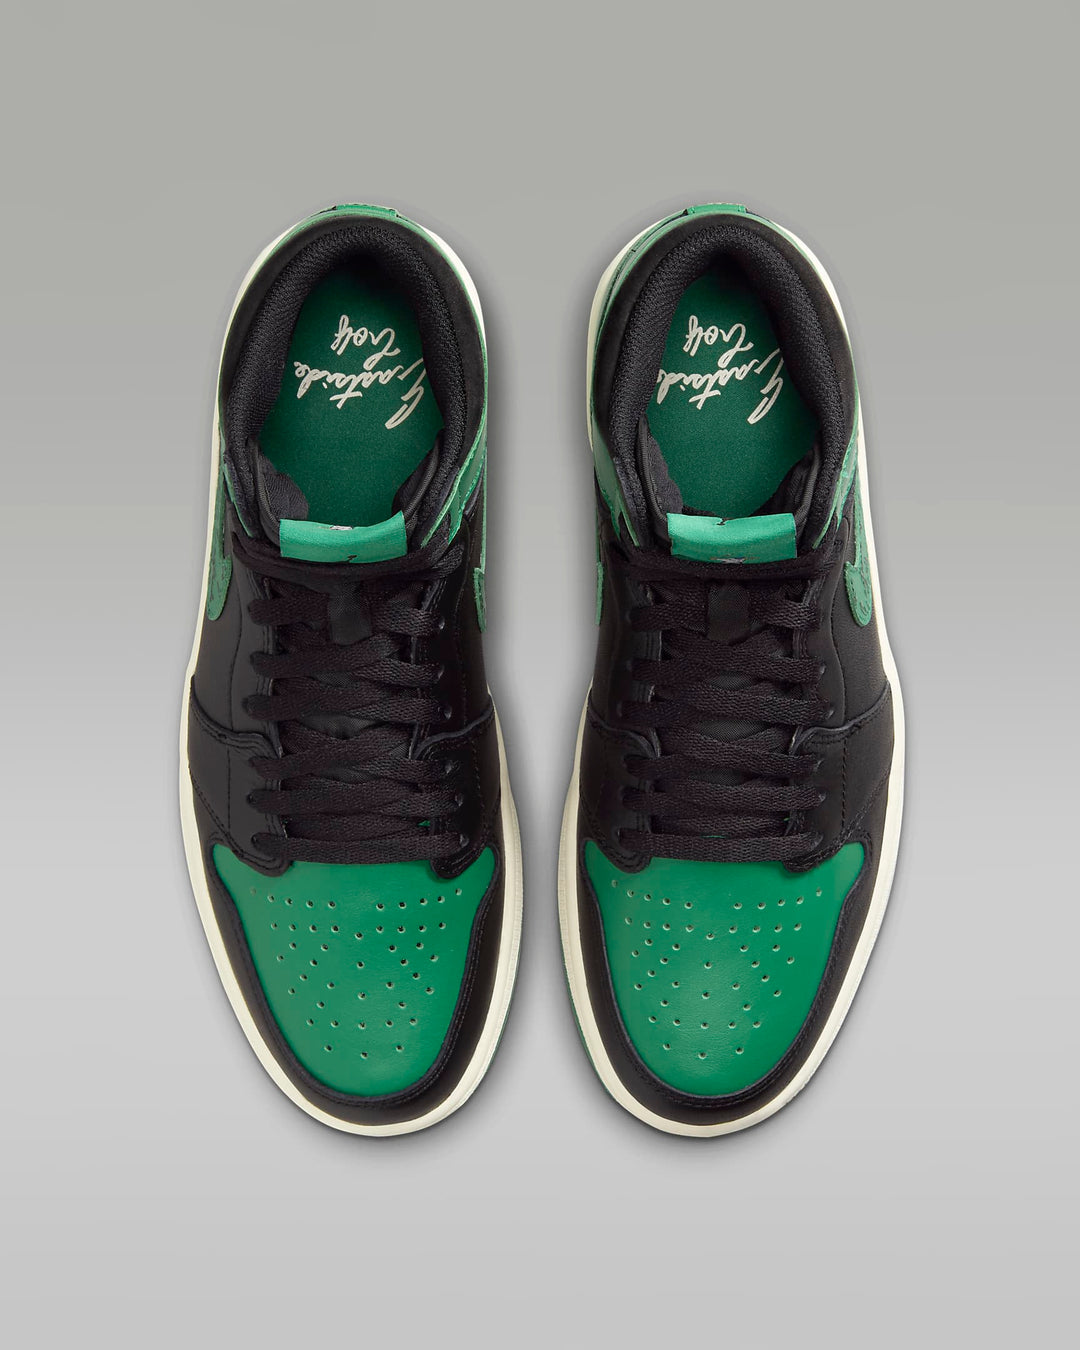 Giày Nike Air Jordan I High G x Eastside Golf Men Golf Shoes #Malachite